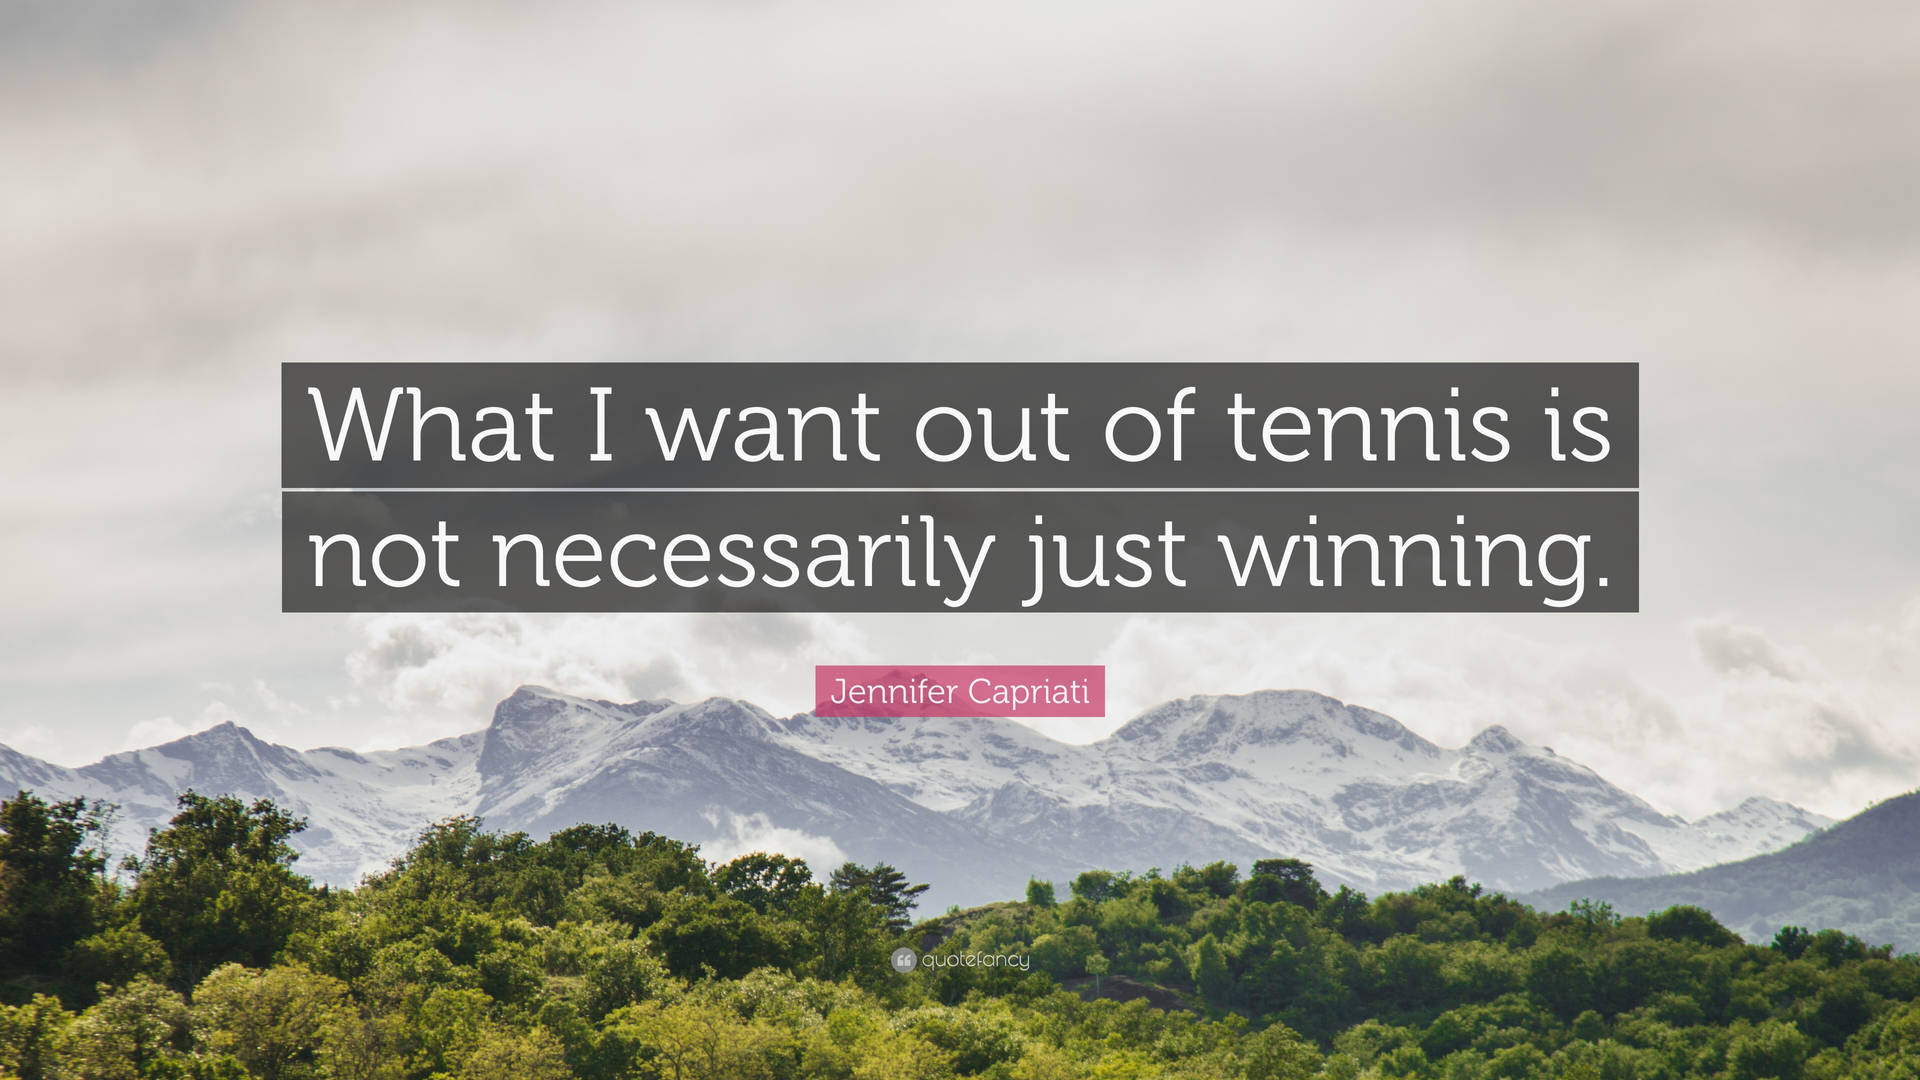 Jennifer Capriati Quote About Winning Wallpaper